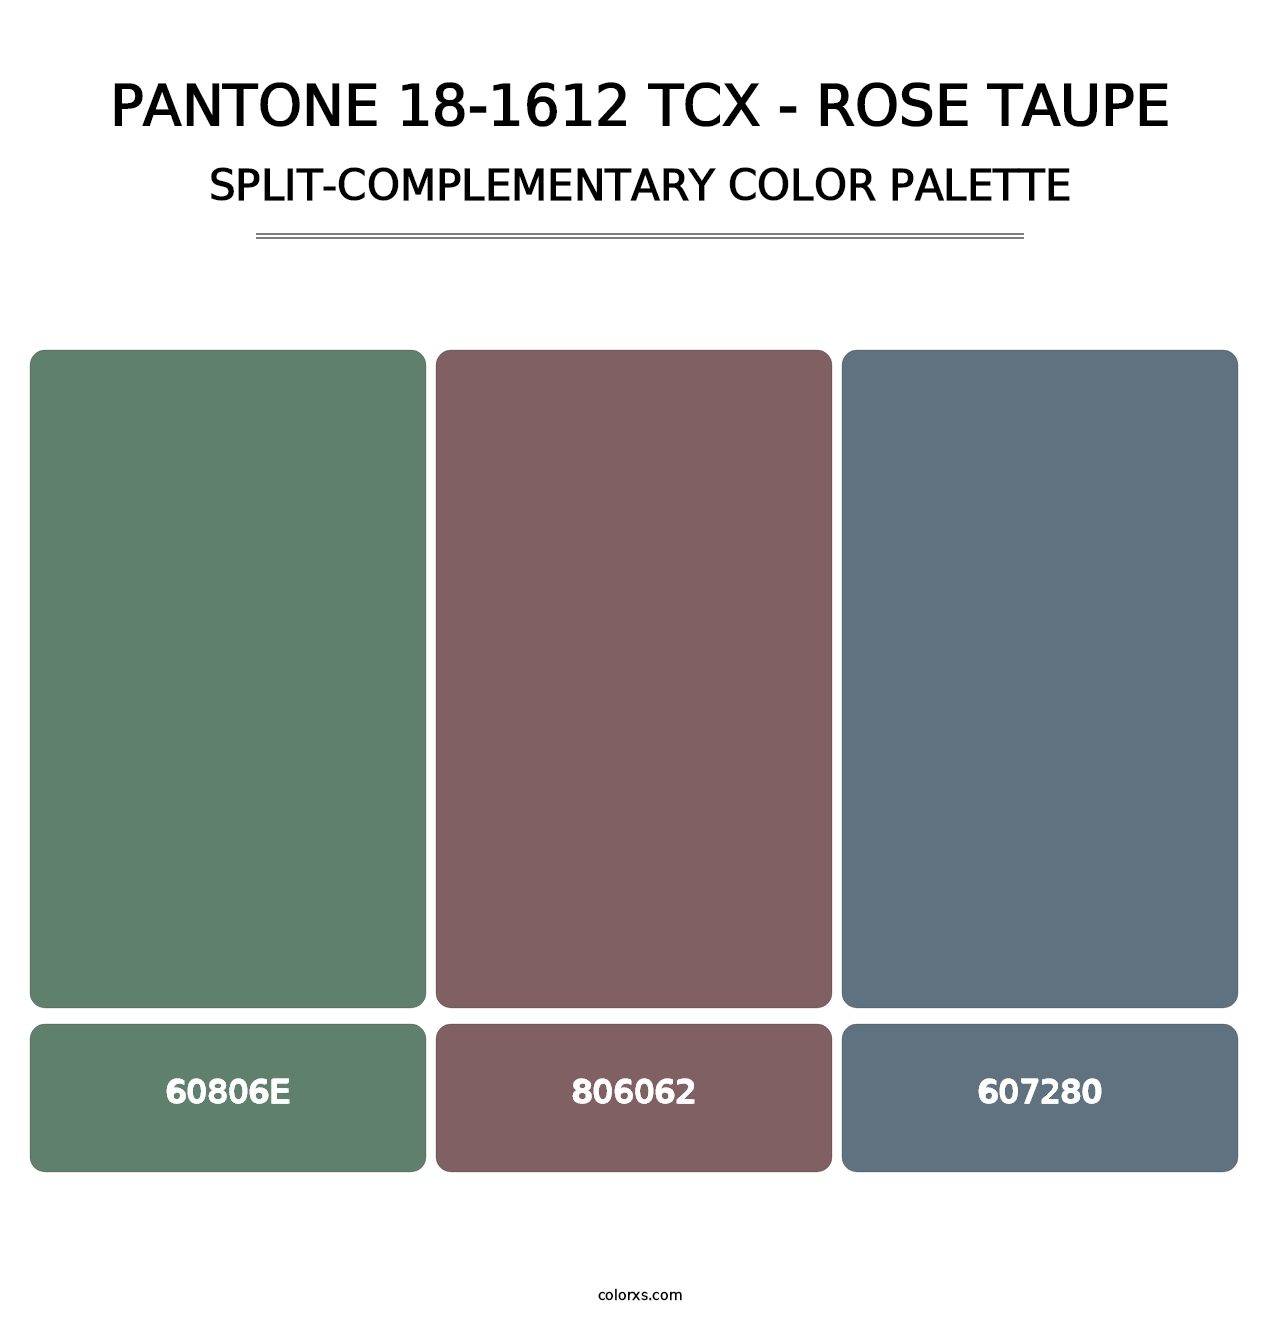 PANTONE 18-1612 TCX - Rose Taupe - Split-Complementary Color Palette